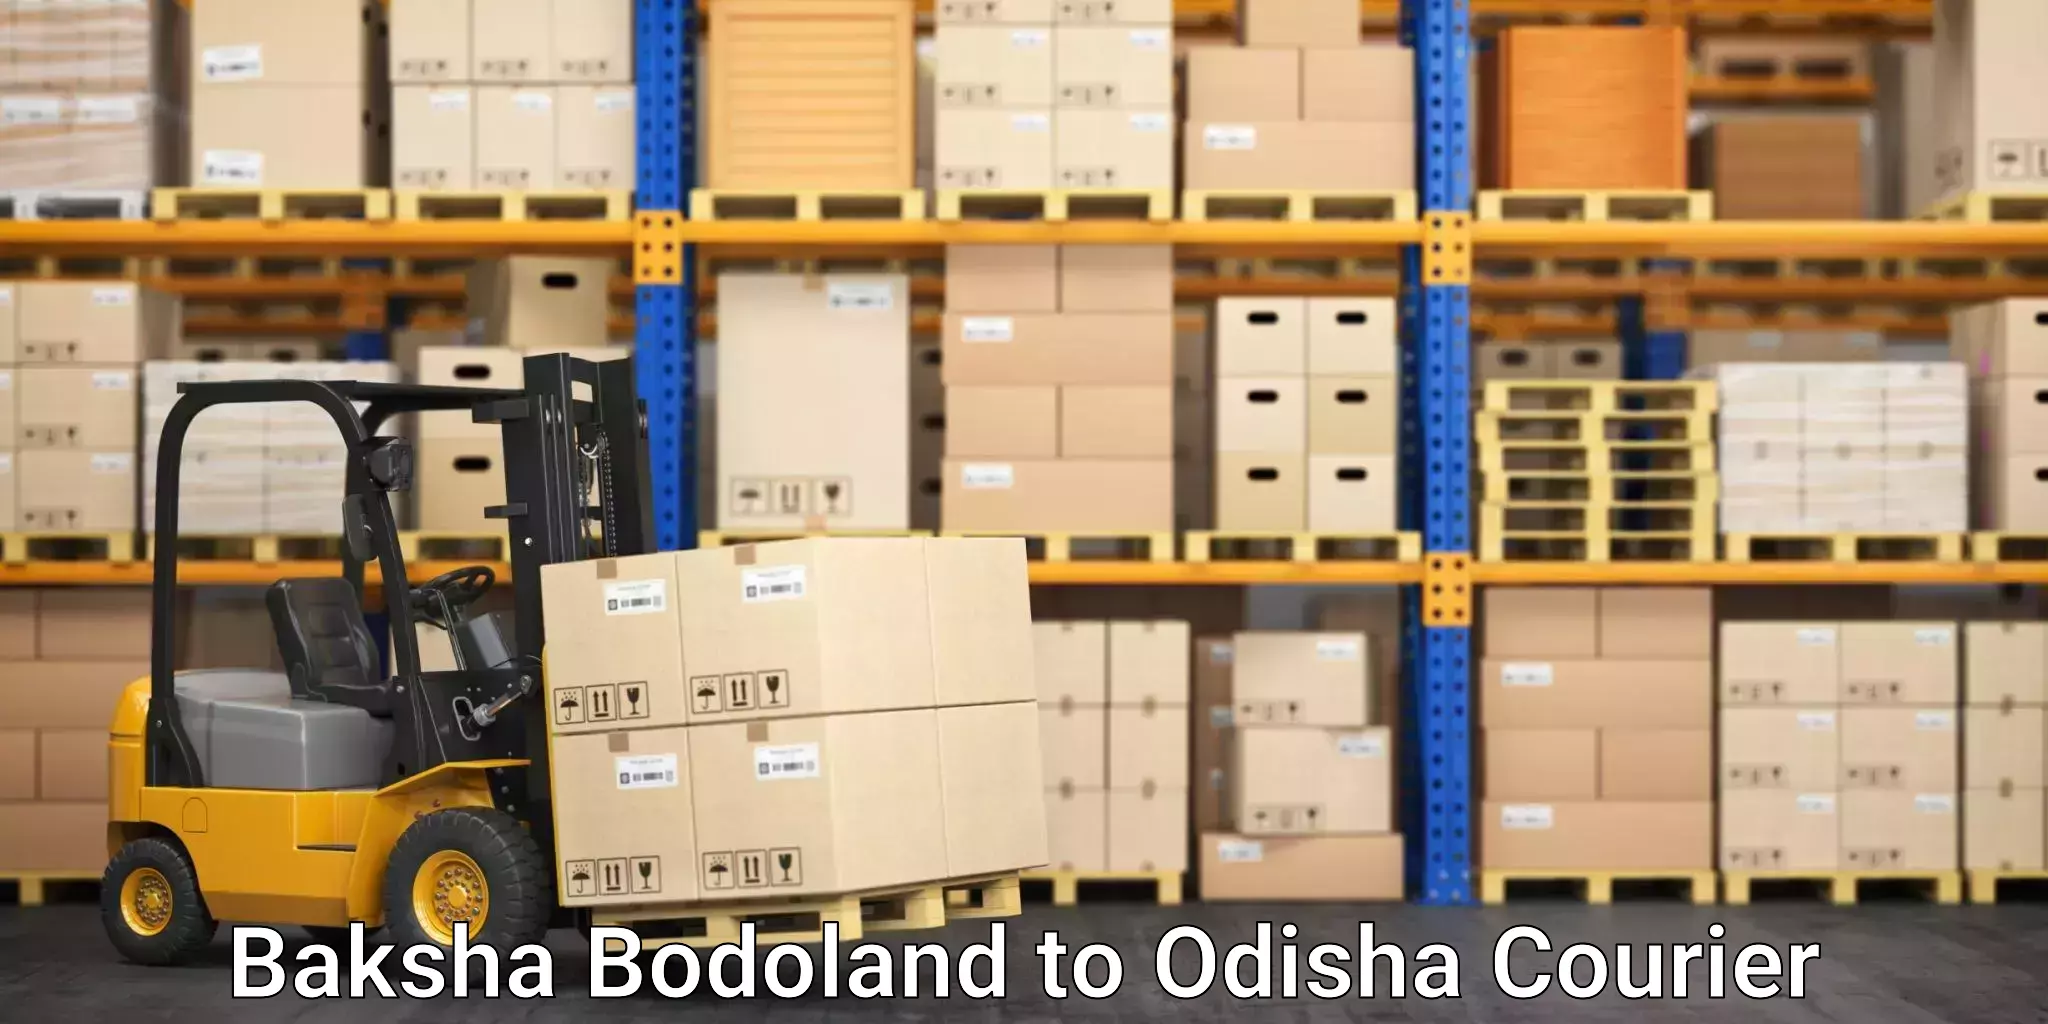 Modern courier technology Baksha Bodoland to Tikiri